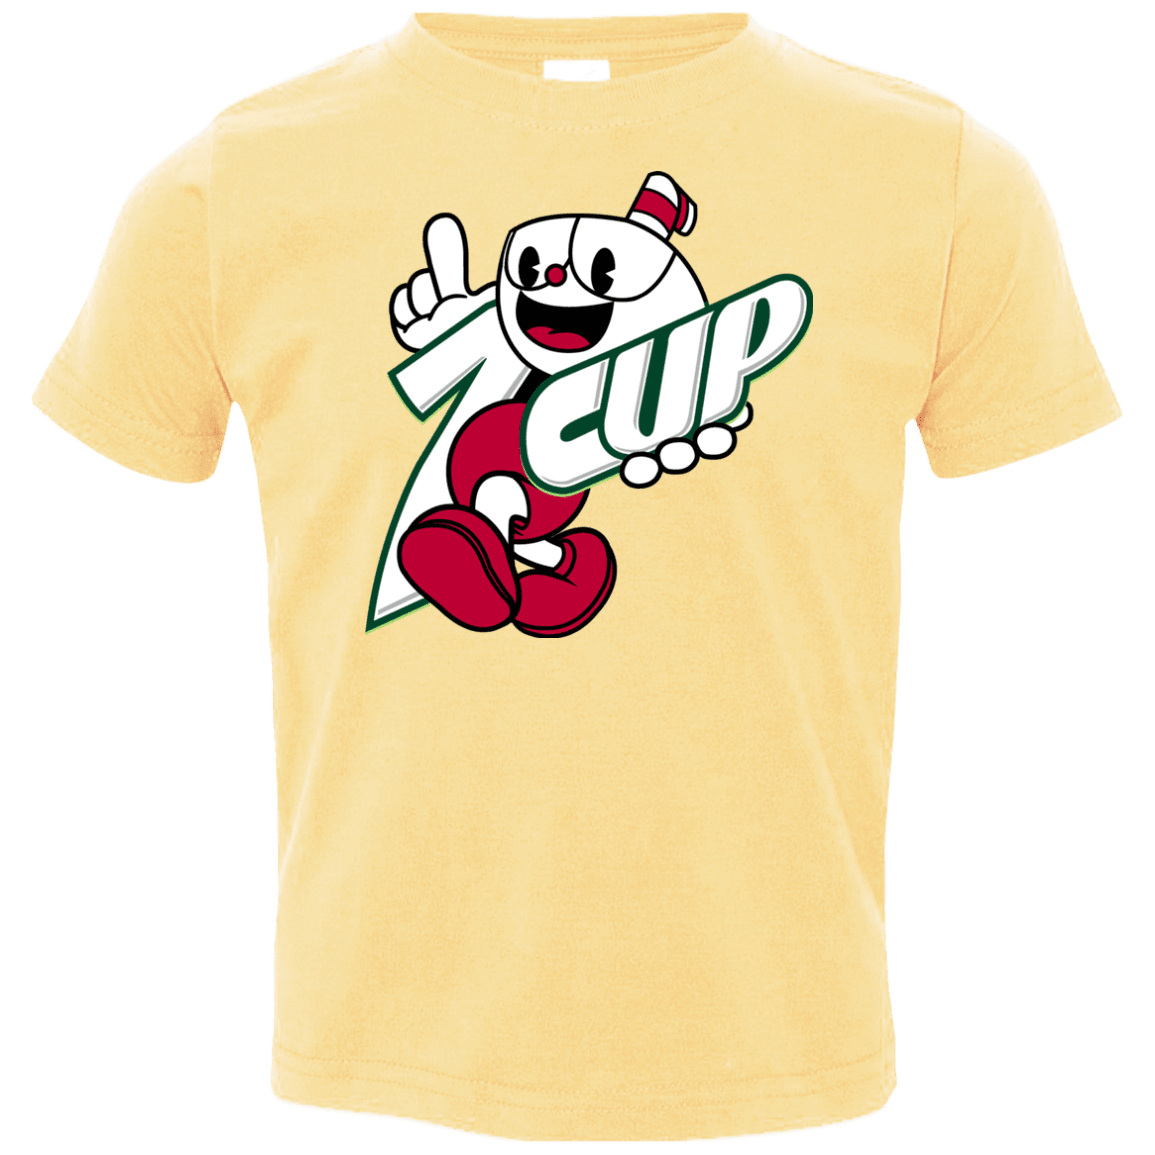 T-Shirts Butter / 2T 1cup Toddler Premium T-Shirt